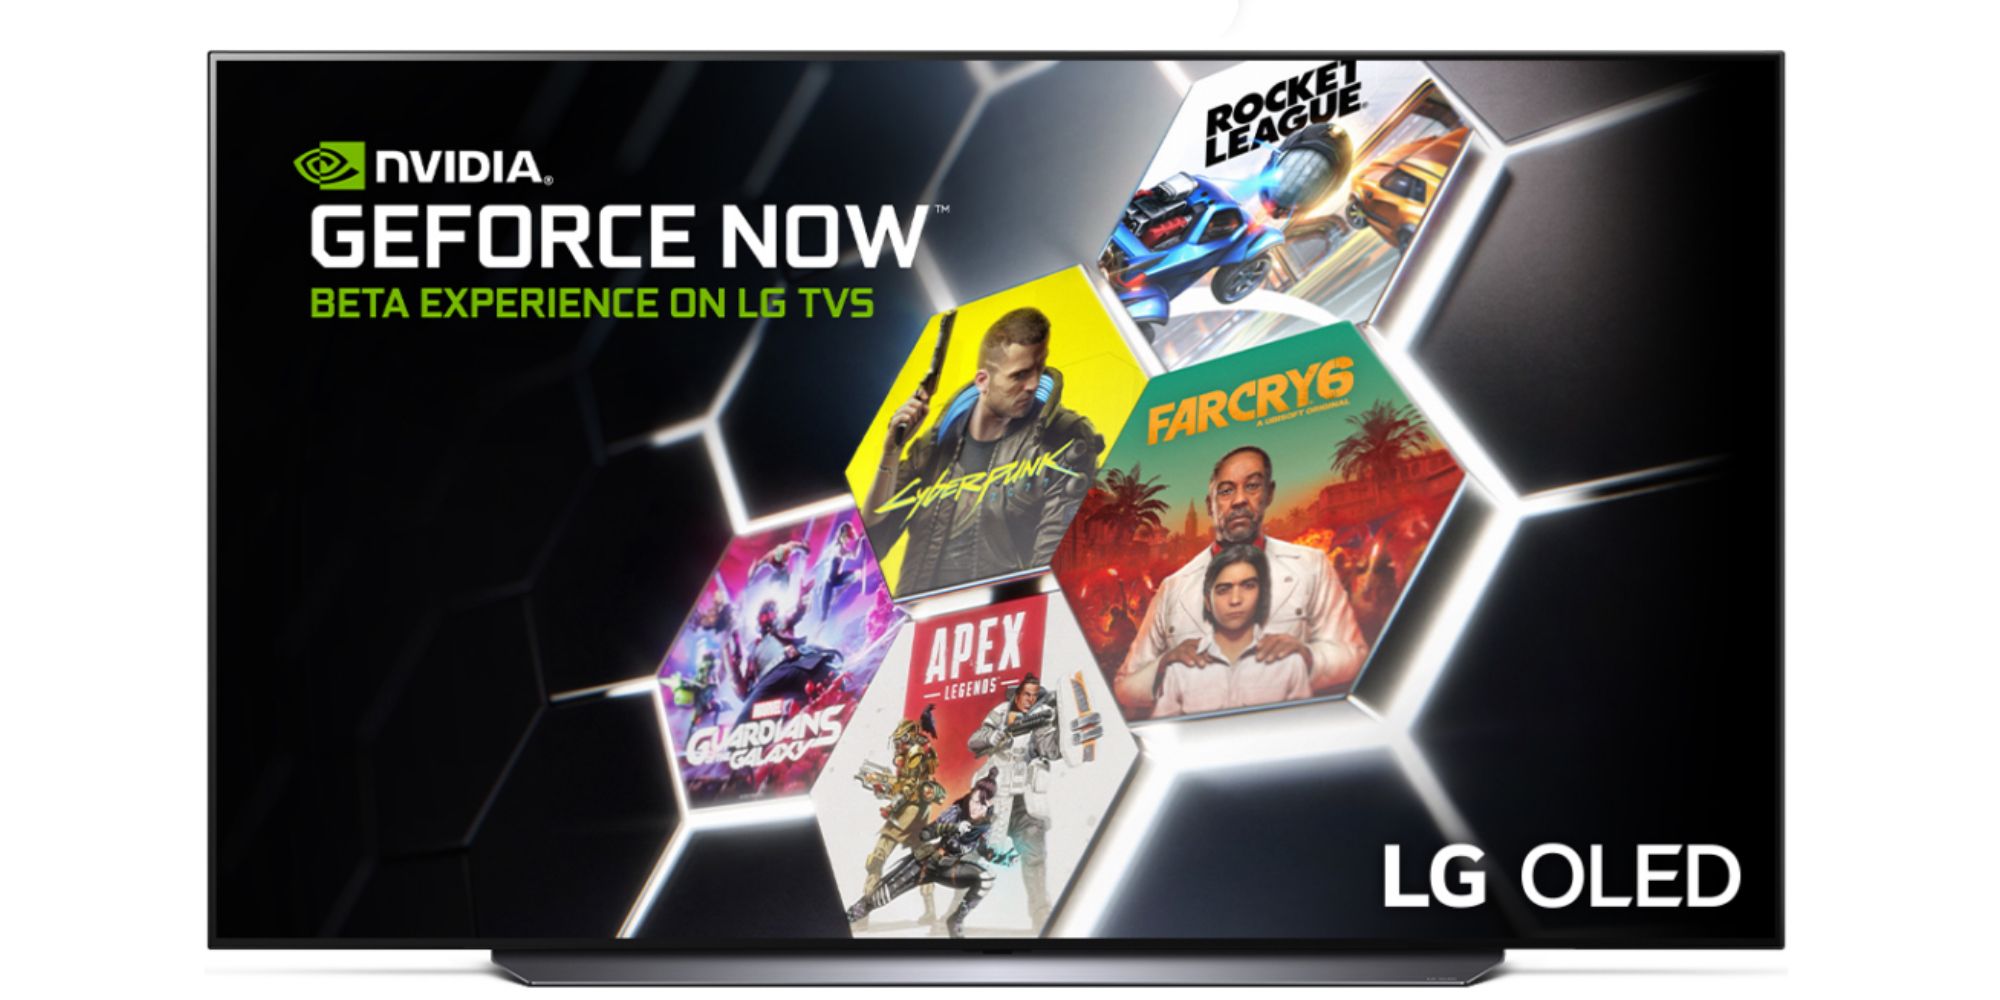 LG OLED TV with Nvidia GeForce Now